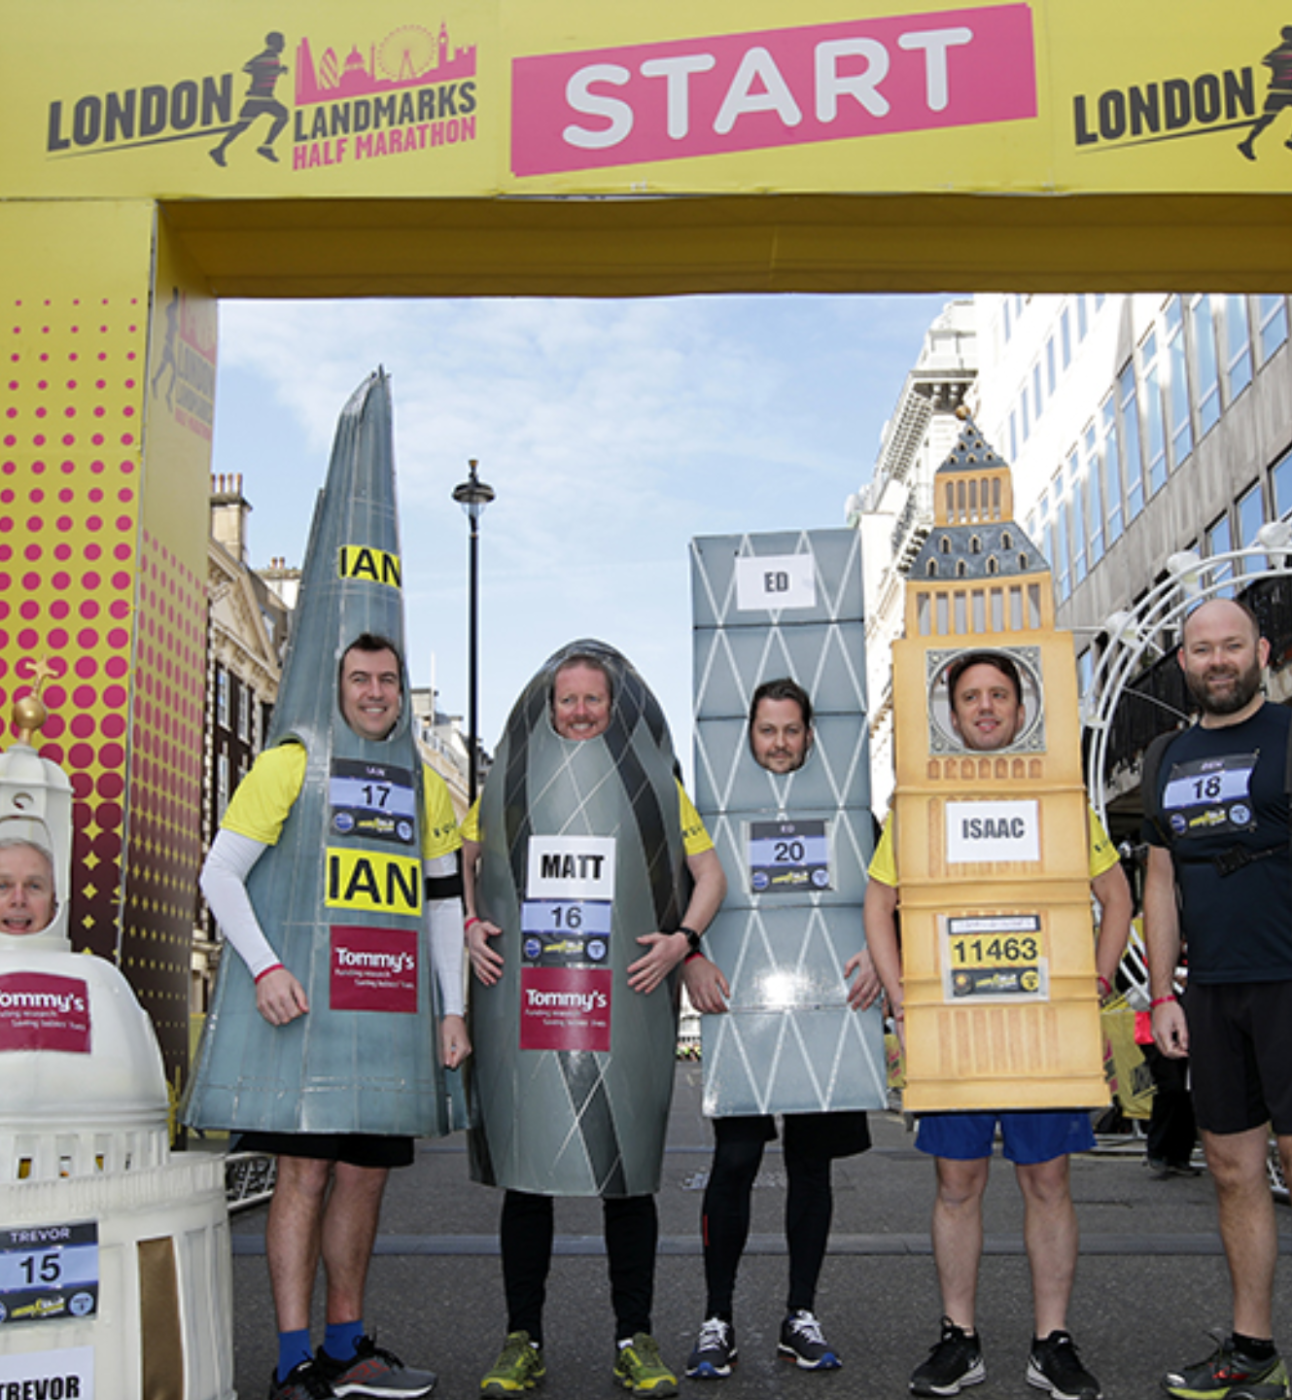 Runners dressed in costumes at the London Landmarks Half Marathon